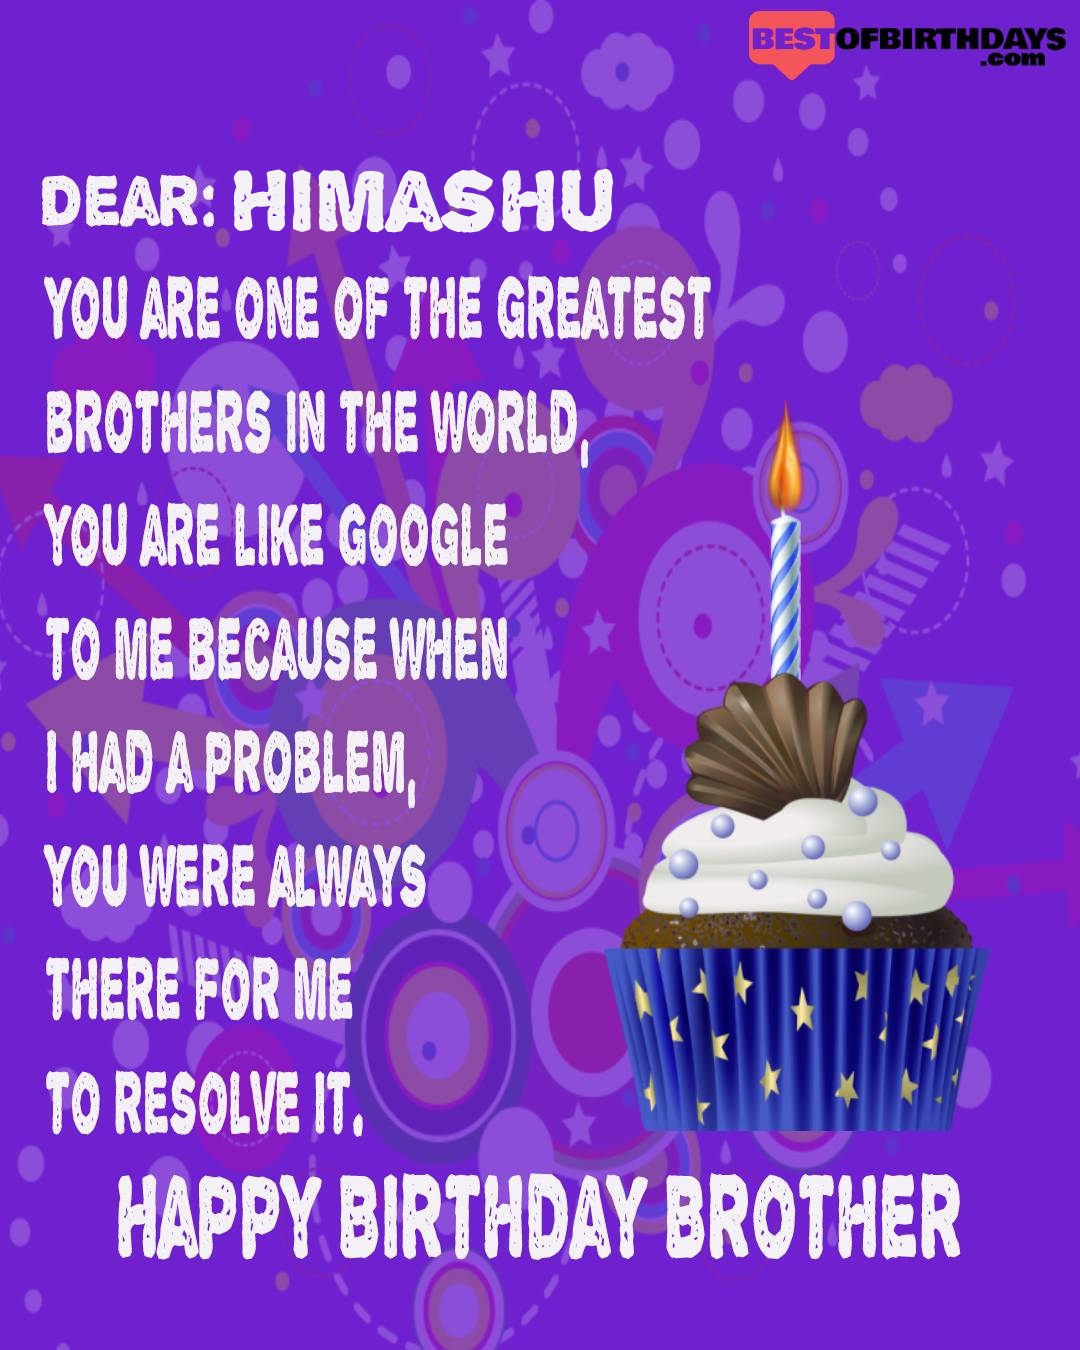 Happy birthday himashu bhai brother bro